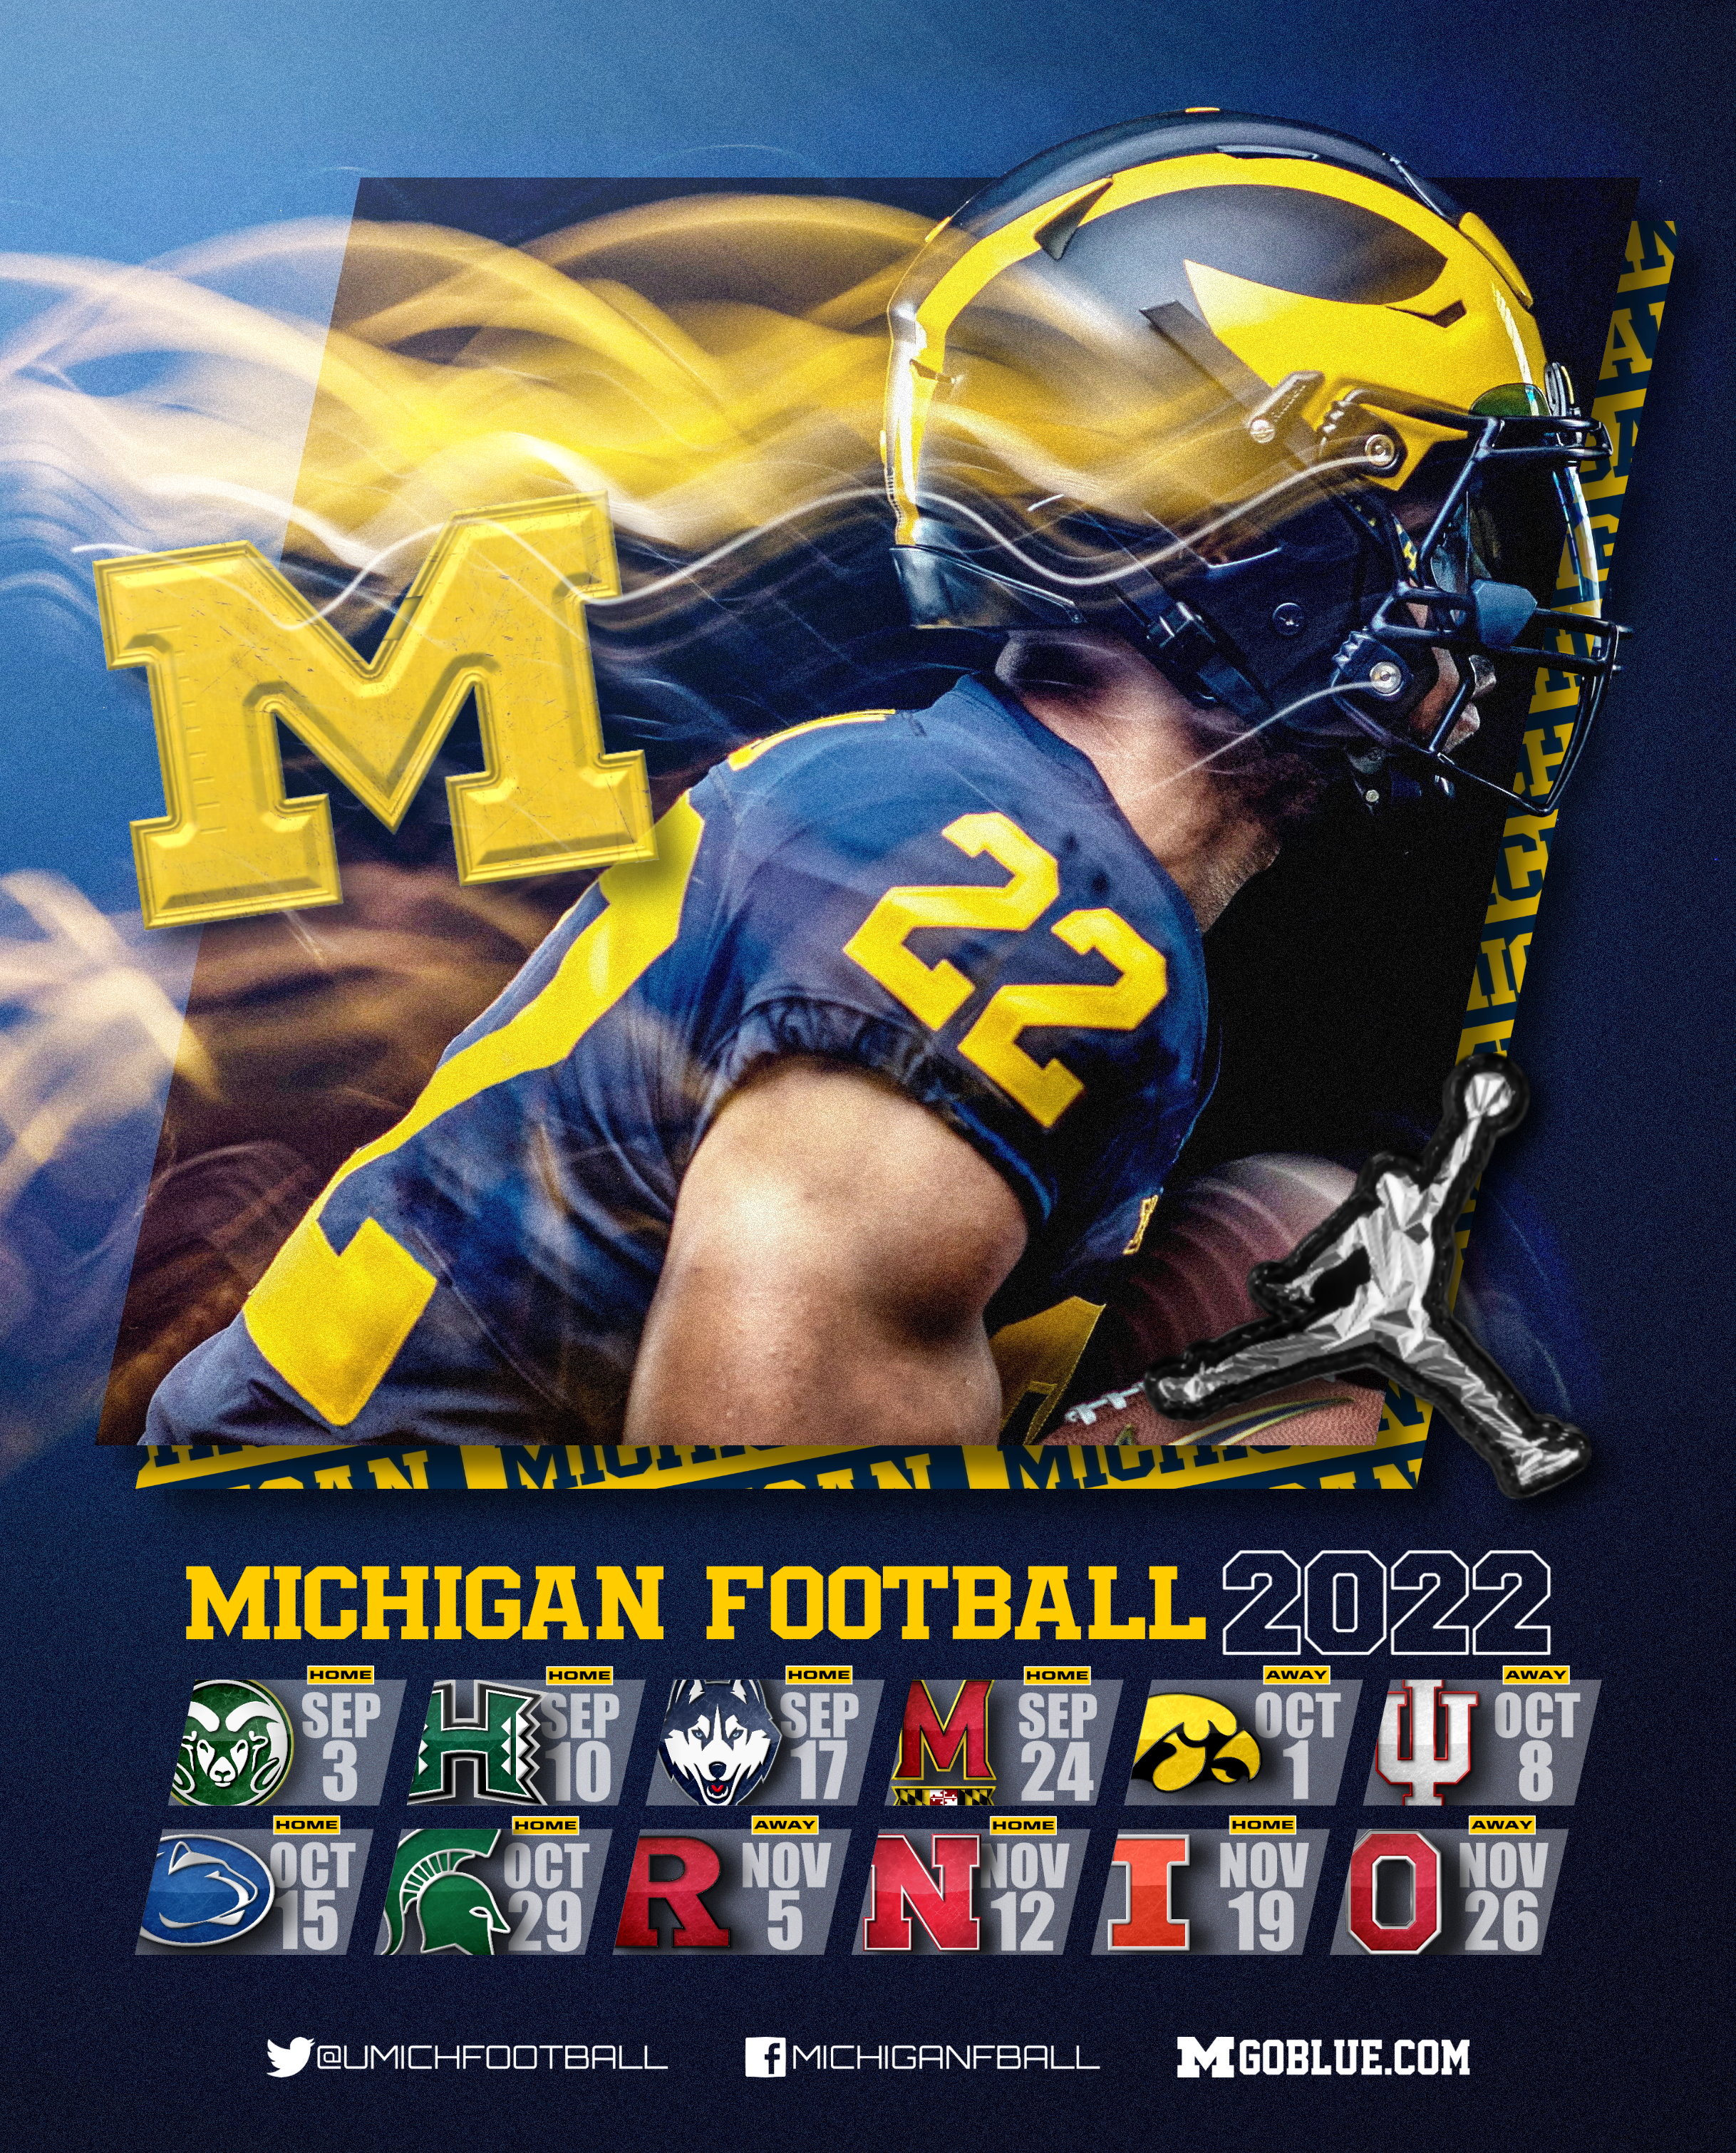 Michigan Football 2022 Schedule Michigan Football On Twitter: "𝐓𝐡𝐞 𝐌𝐢𝐜𝐡𝐢𝐠𝐚𝐧 𝐅𝐨𝐨𝐭𝐛𝐚𝐥𝐥  𝟐𝟎𝟐𝟐 𝐒𝐜𝐡𝐞𝐝𝐮𝐥𝐞! 🗞 Https://T.co/M6Z57Mi9Qh 🎟  Https://T.co/Zp7N31Szdy #Goblue Https://T.co/Bab5Dwgoqv" / Twitter